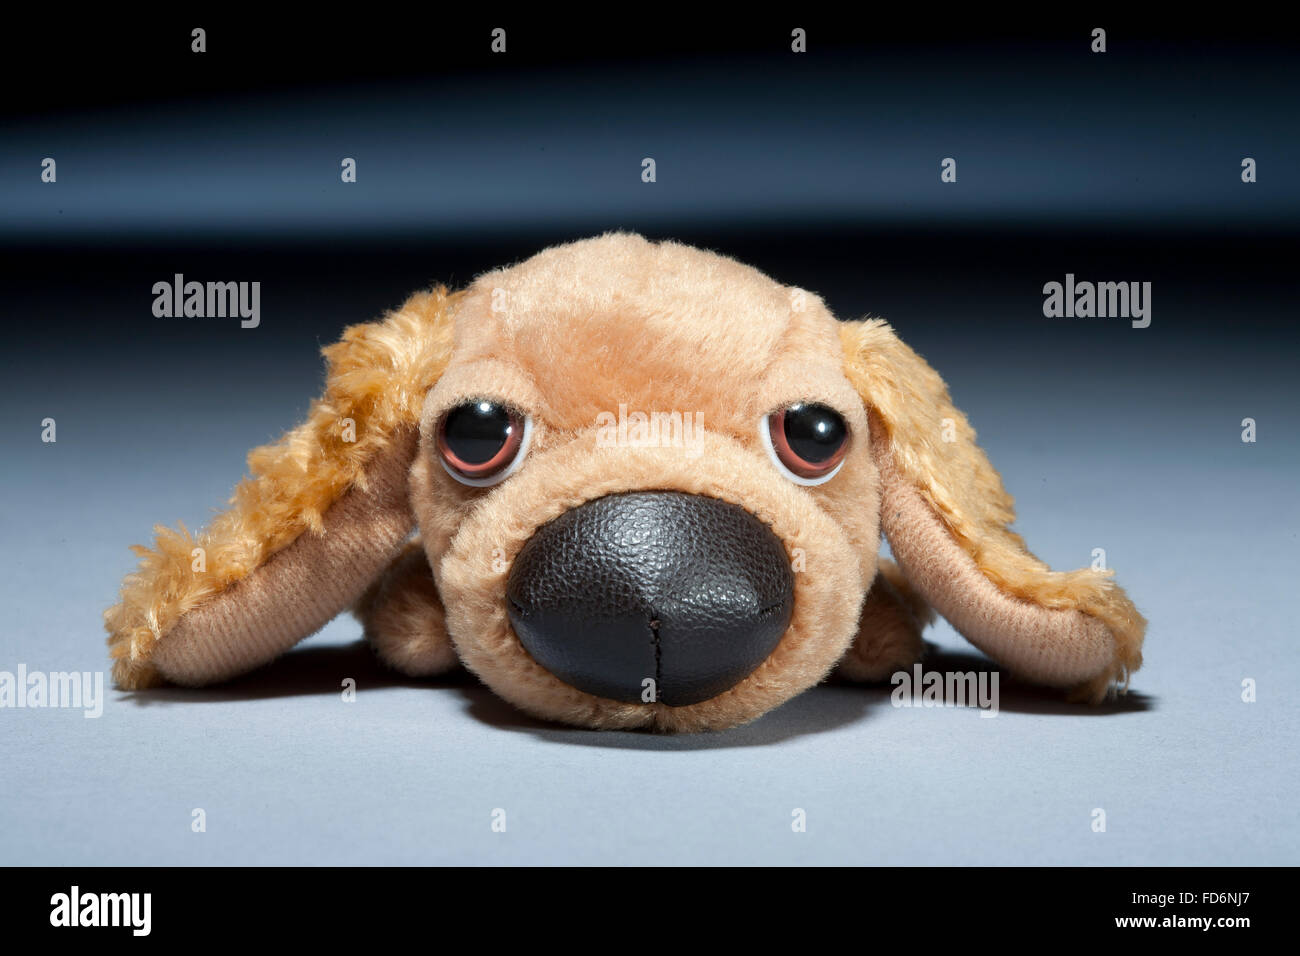 Mcdonalds toy dog on a grey background Stock Photo